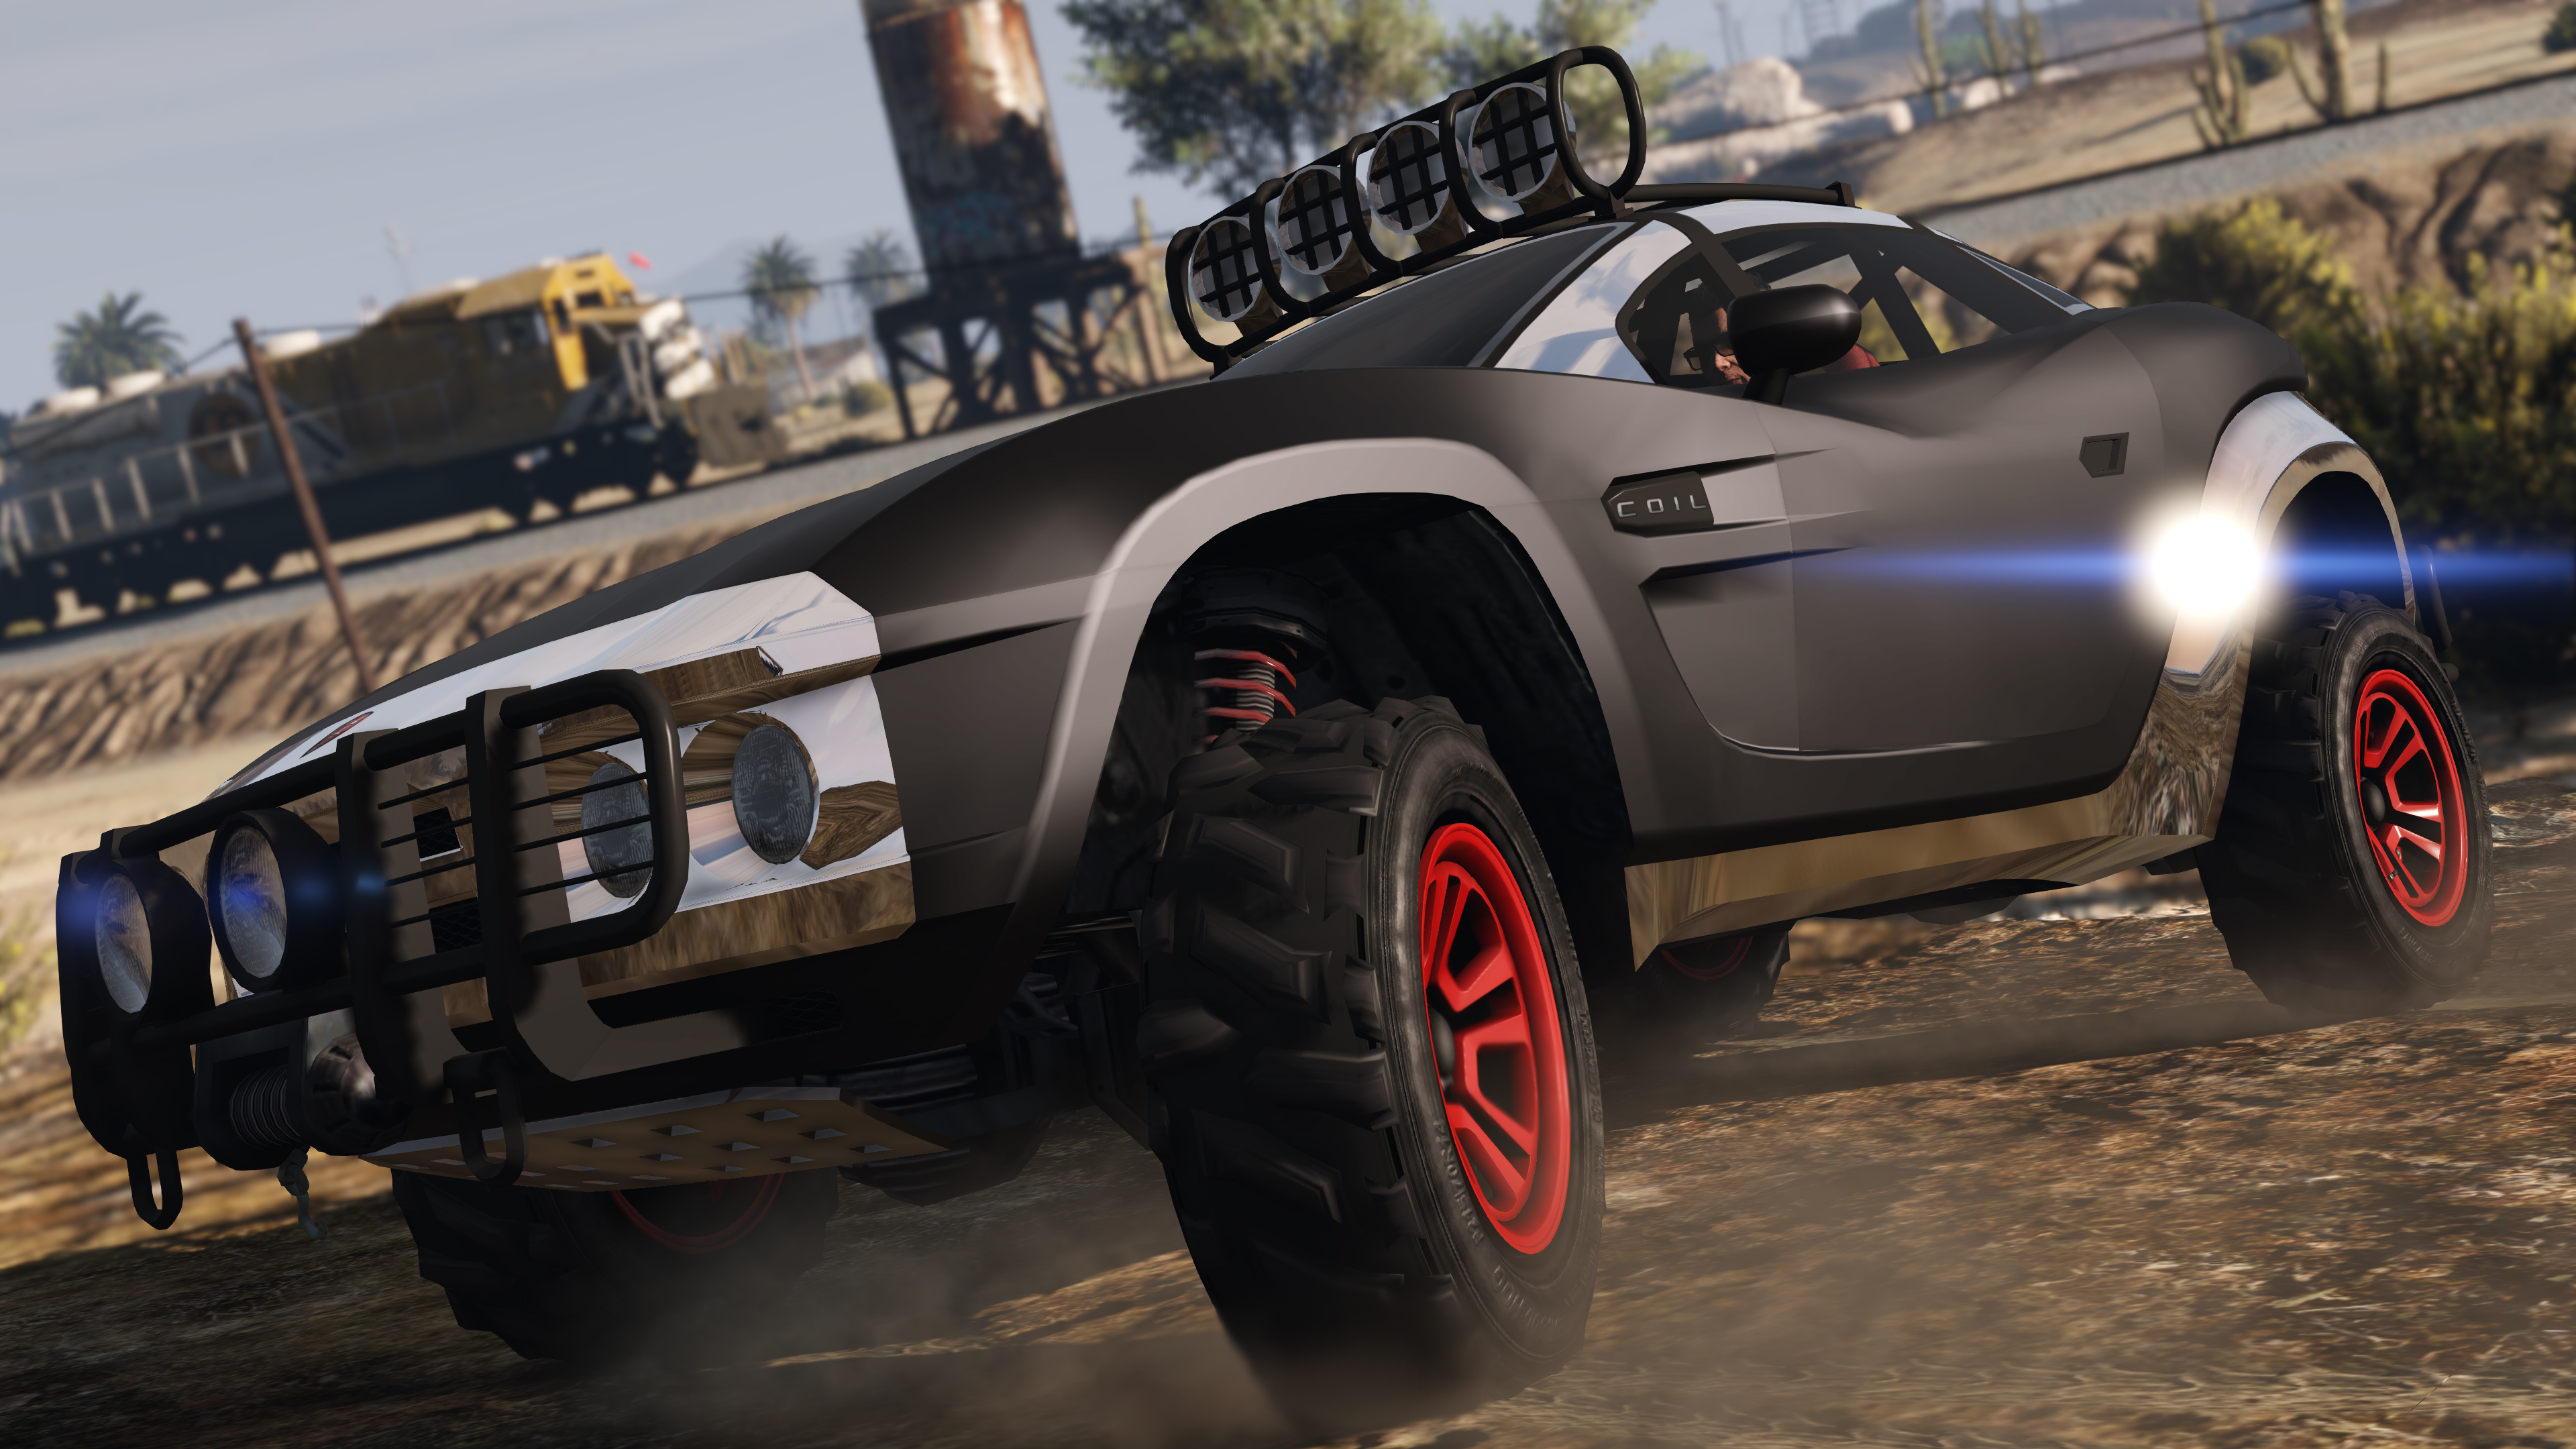 GTA Online: Rockstar corrige exploit MASSIVO do jogo